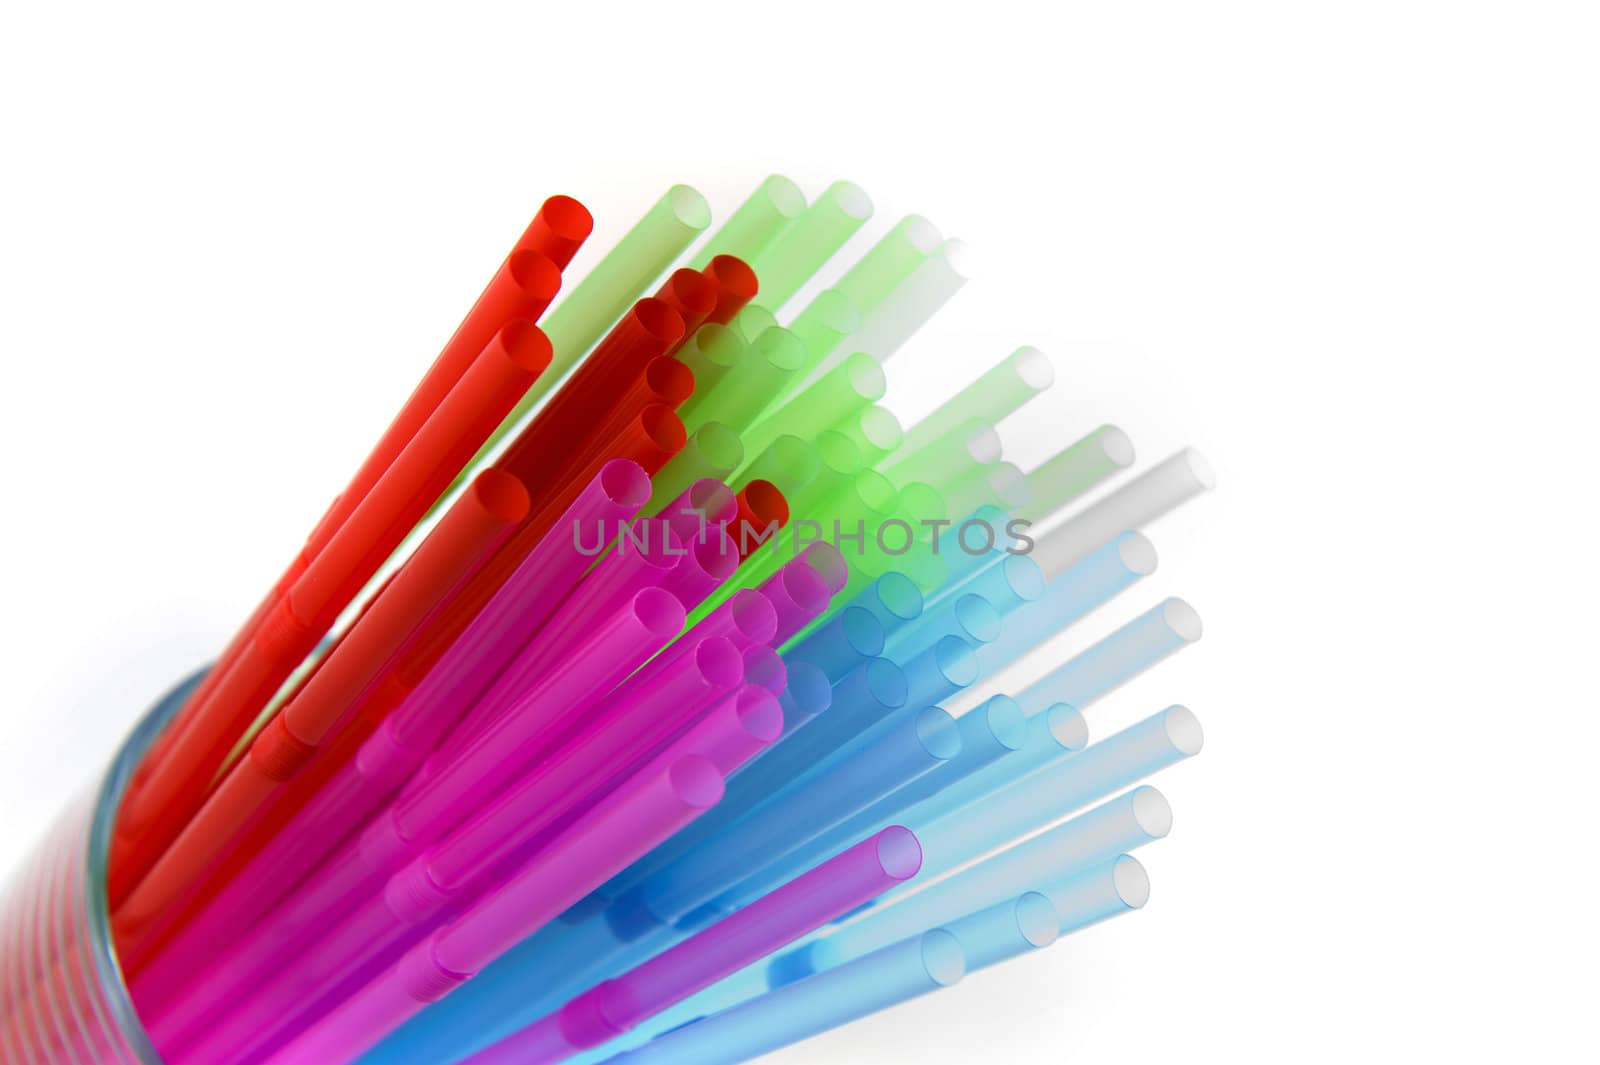 colorfull straws